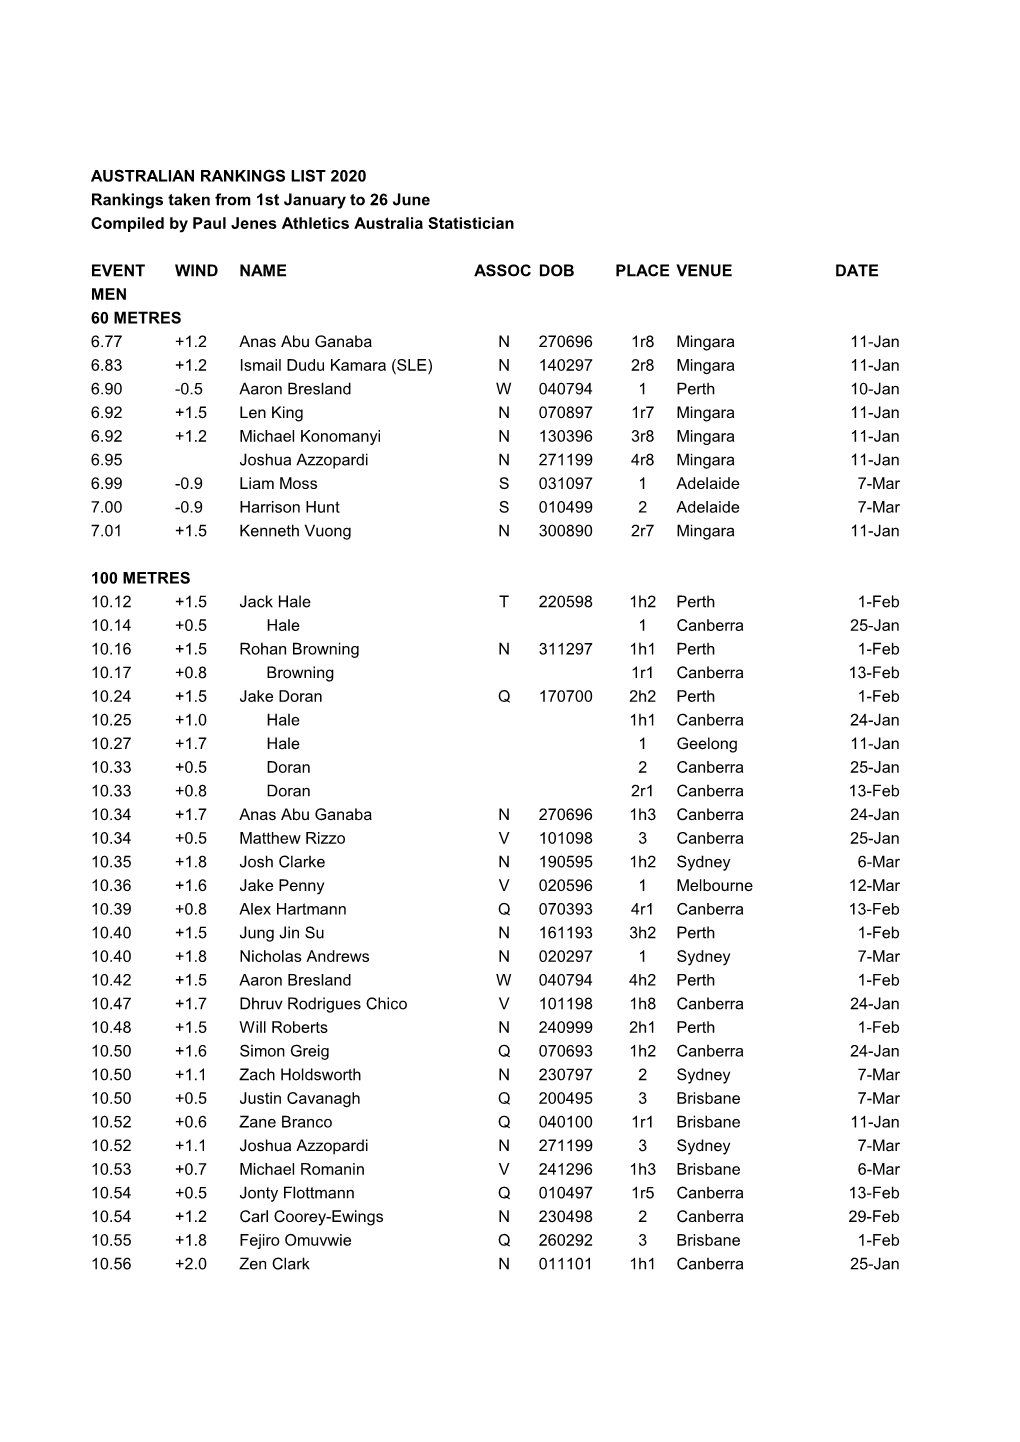 AUSTRALIAN RANKINGS LIST 2020 Rankings Taken from 1St January to 26 June Compiled by Paul Jenes Athletics Australia Statistician